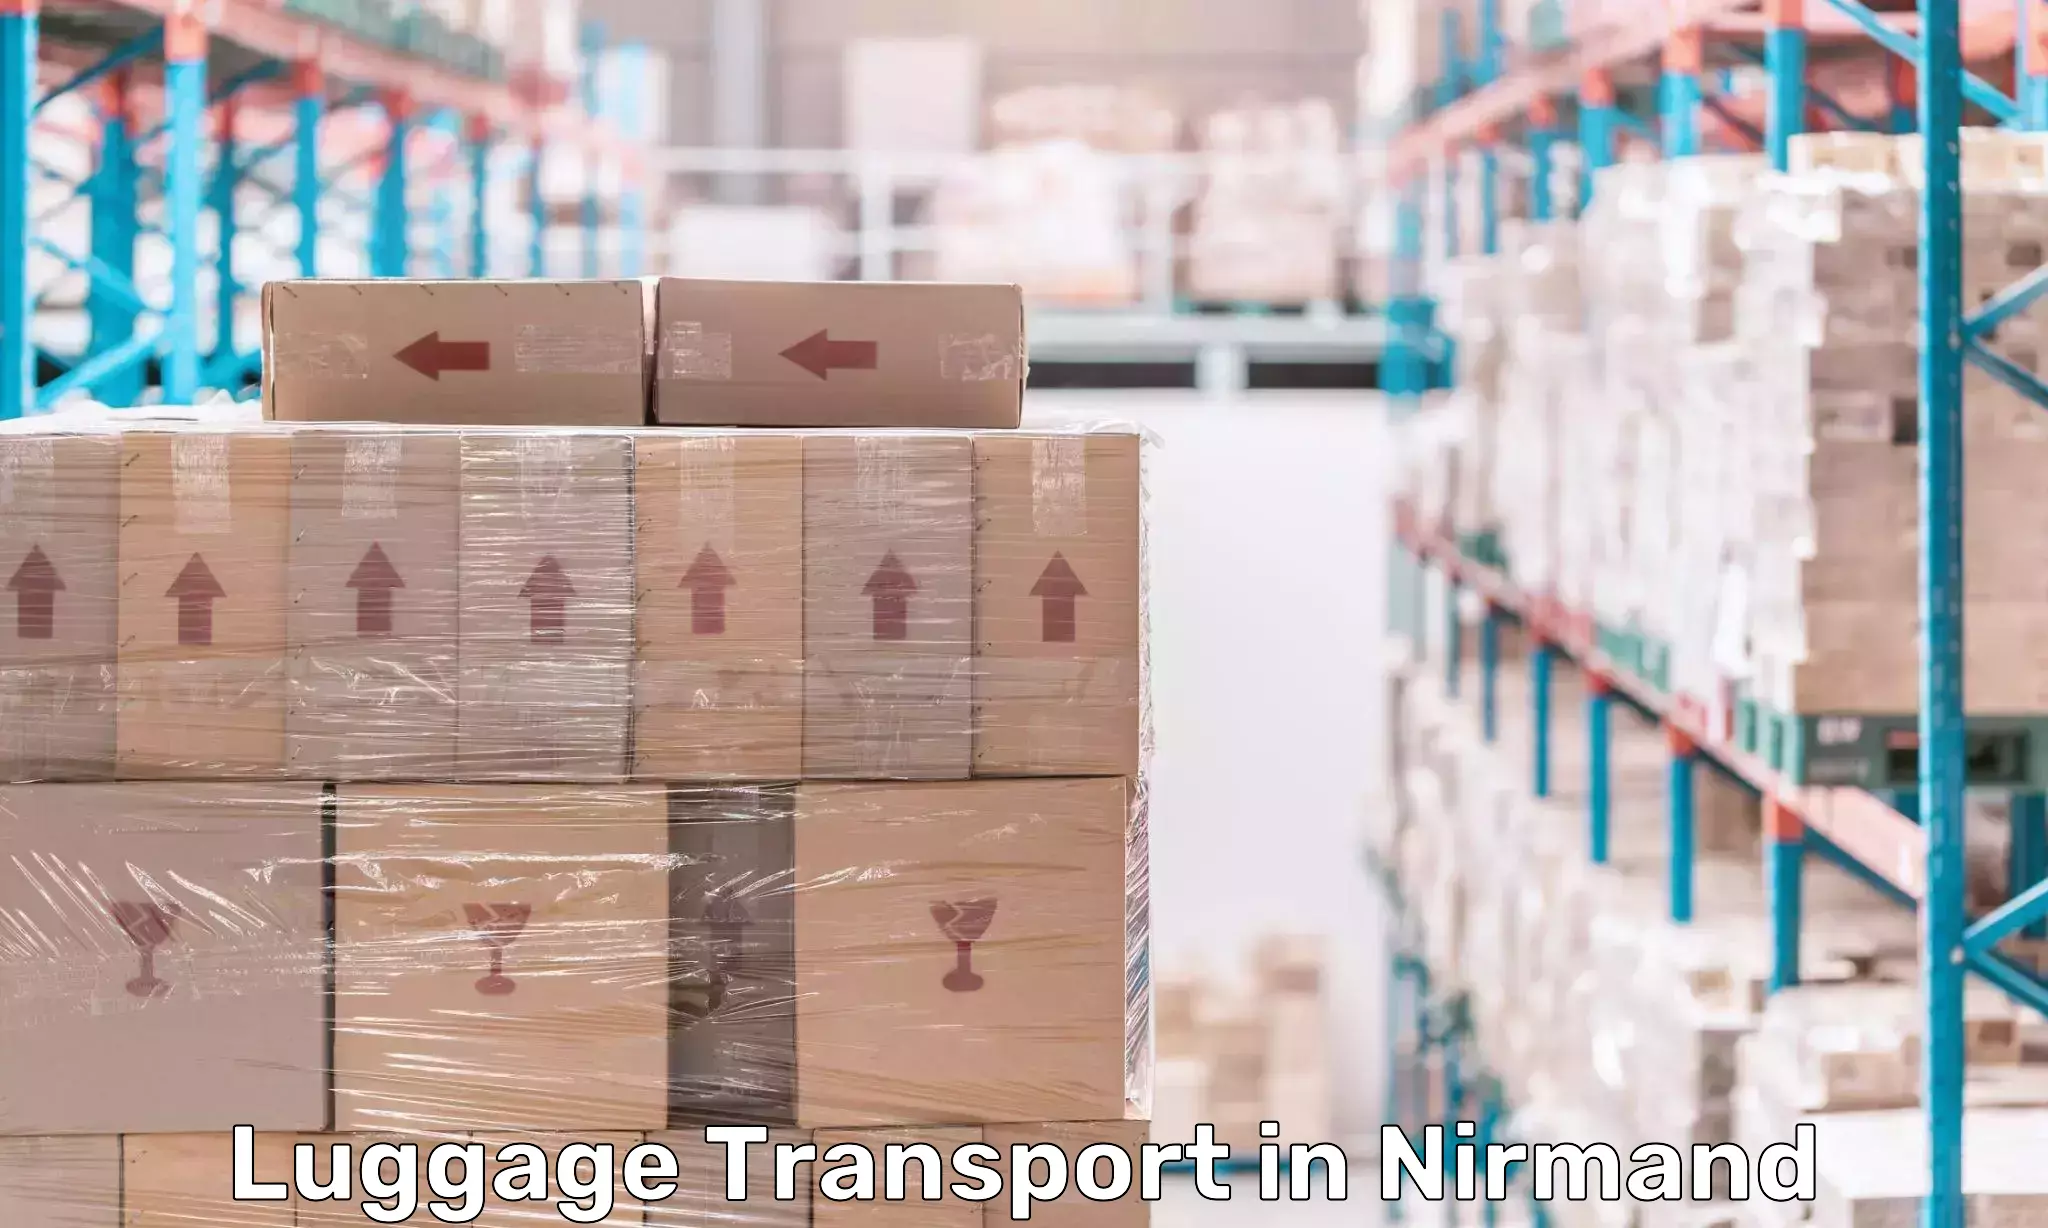 Nationwide luggage transport in Nirmand